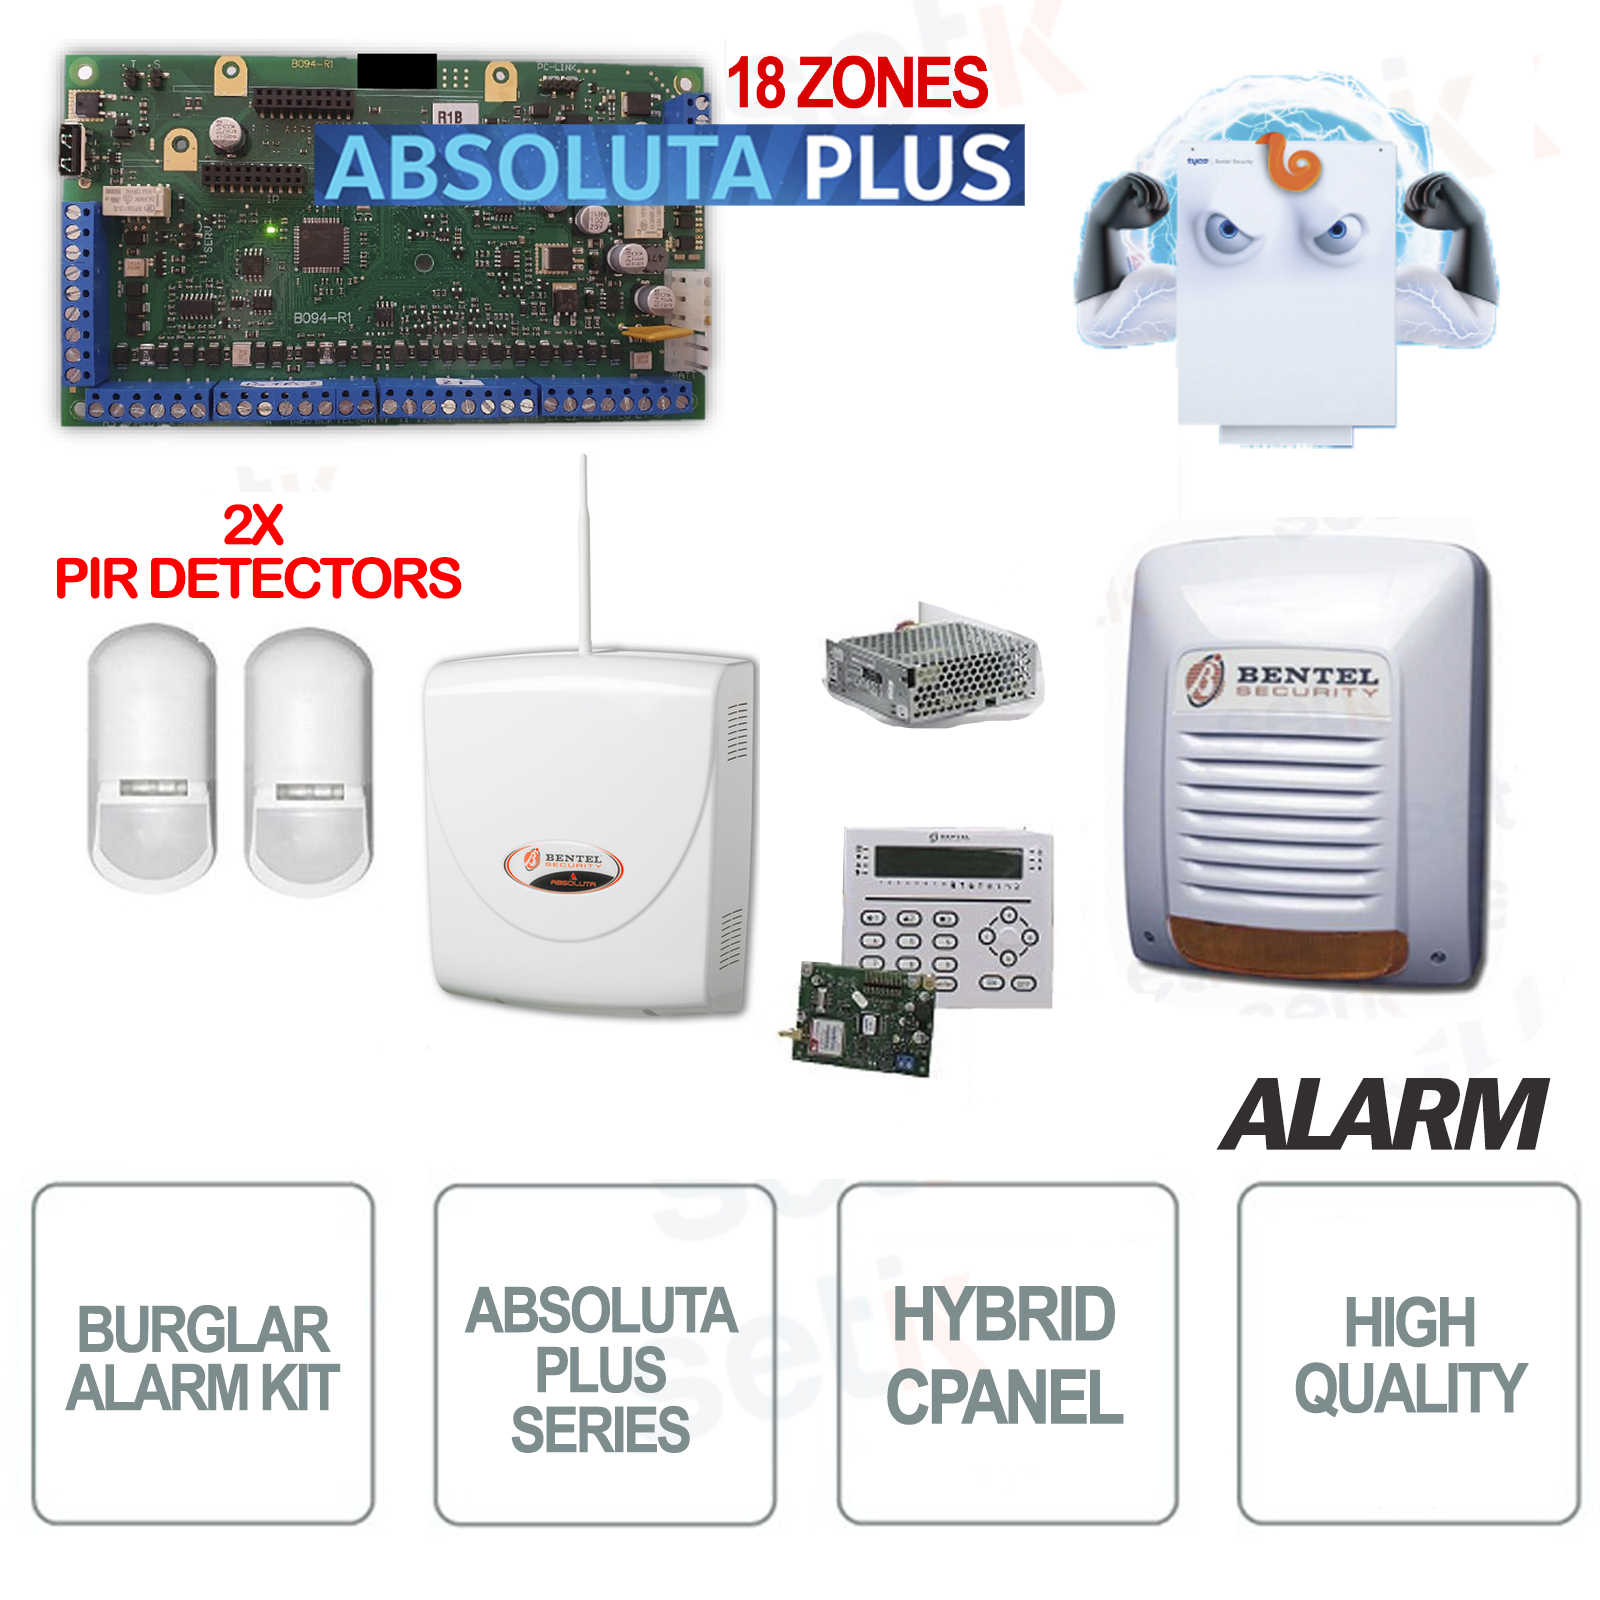 Abspluskit 18 Kit Centrale Allarme Filare Antifurto Bentel Absoluta Plus 18 Zone Sensori Allarme Setik Biz